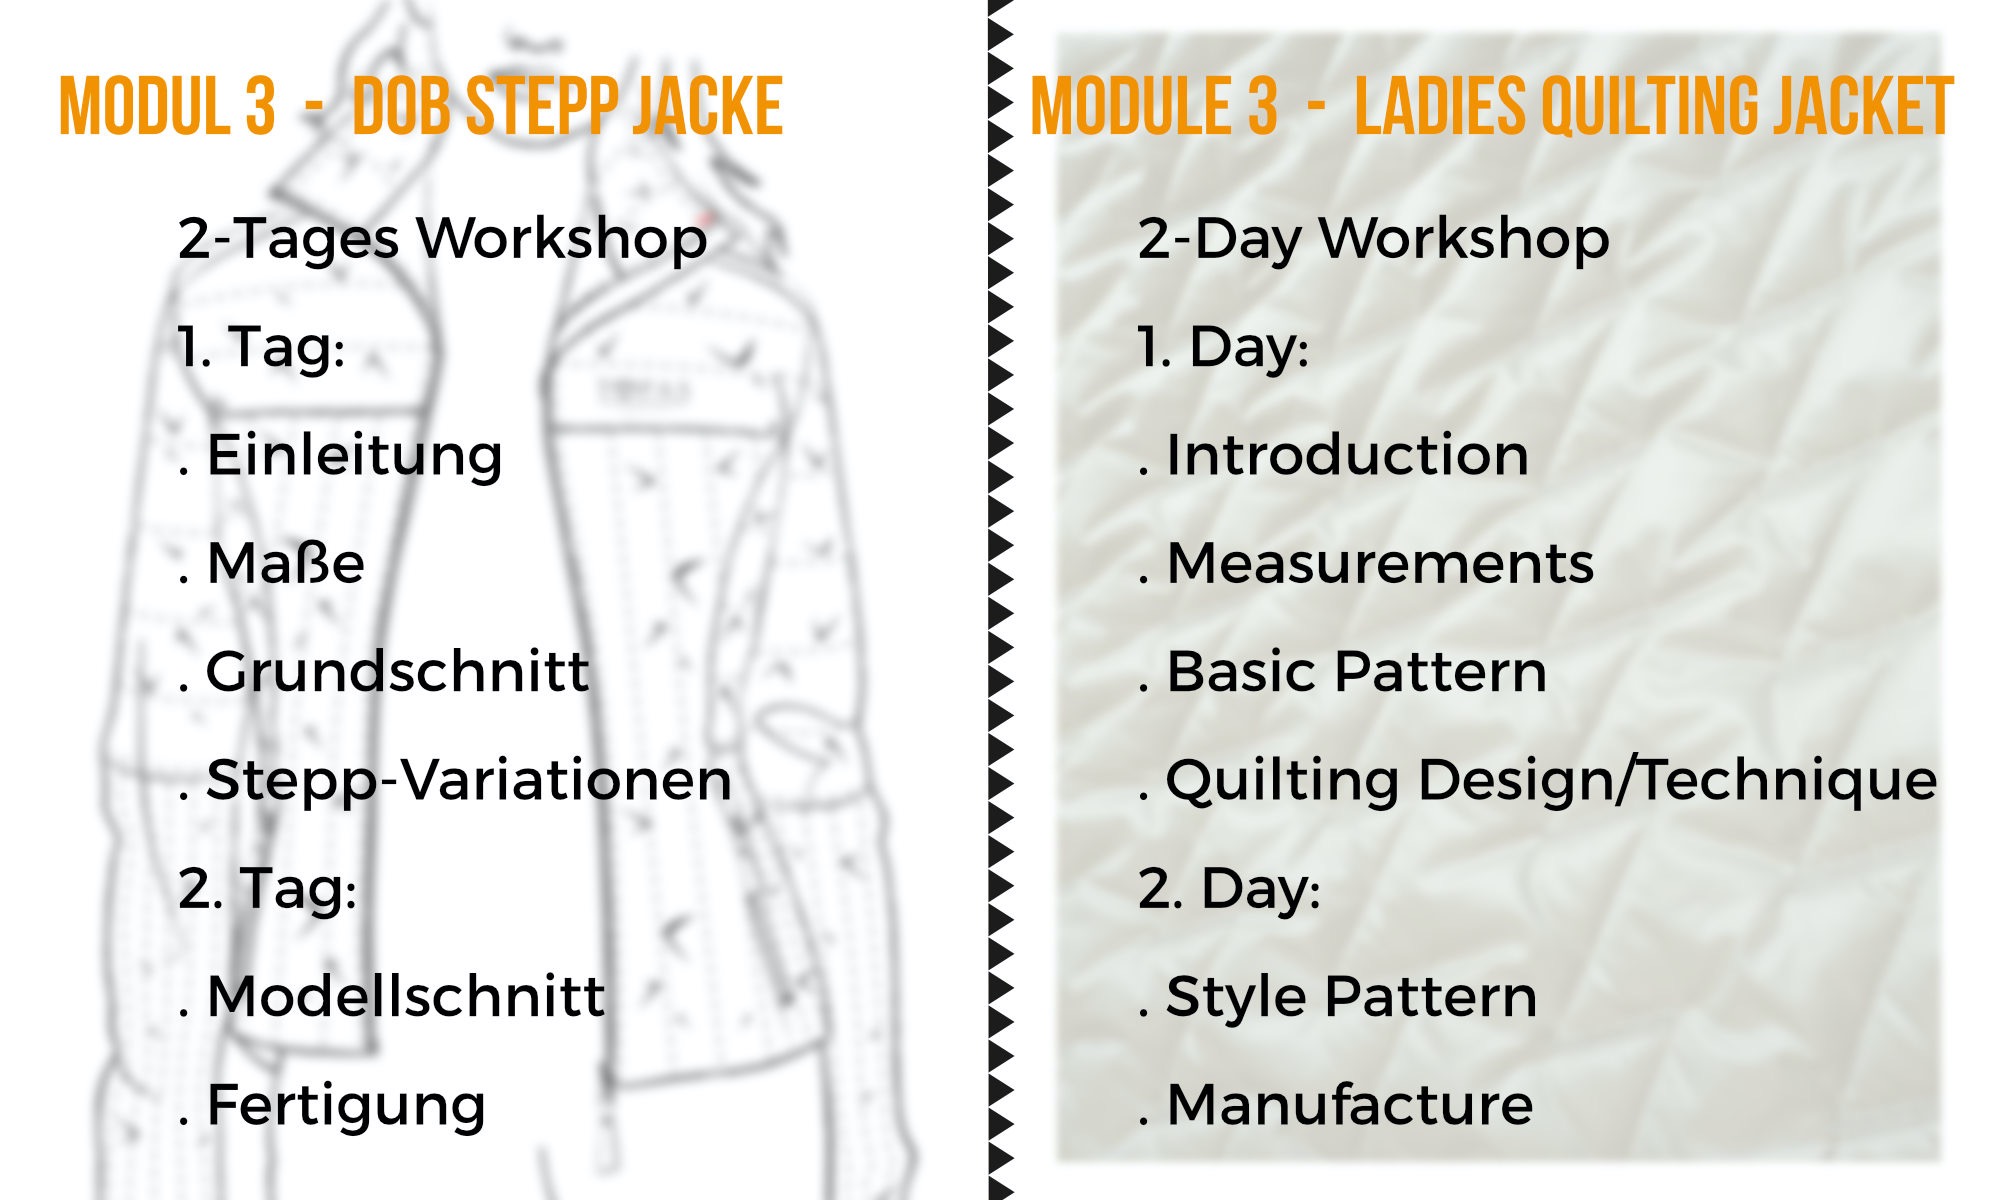 module 3 - ladies quilting jacket